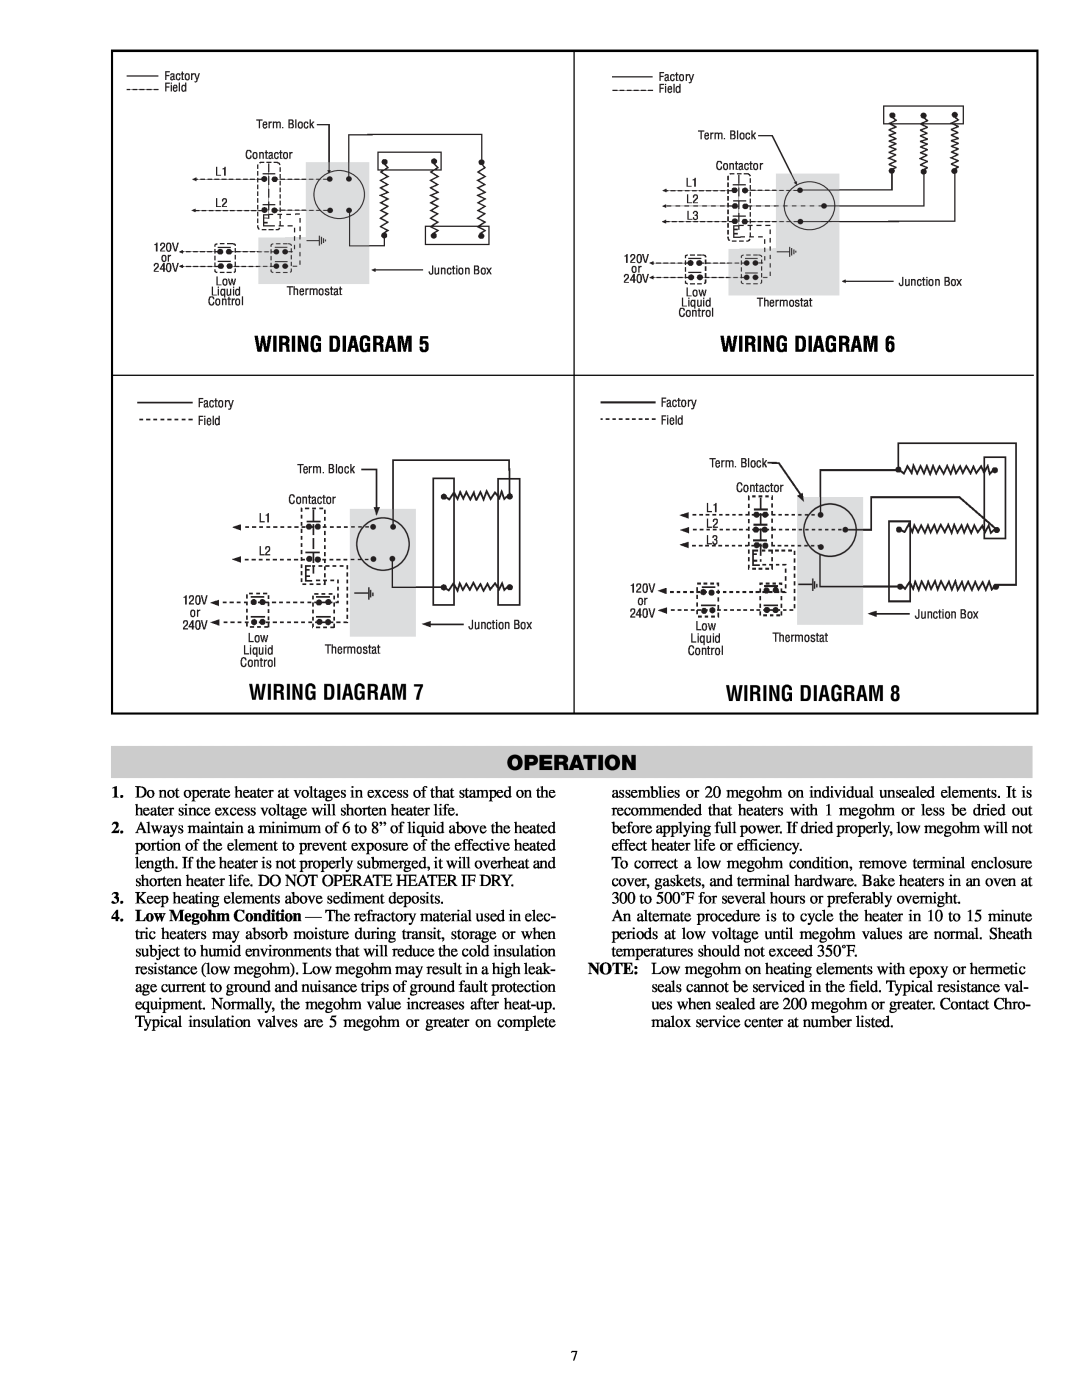 Chromalox PD411-10 installation instructions Operation, Wiring Diagram 